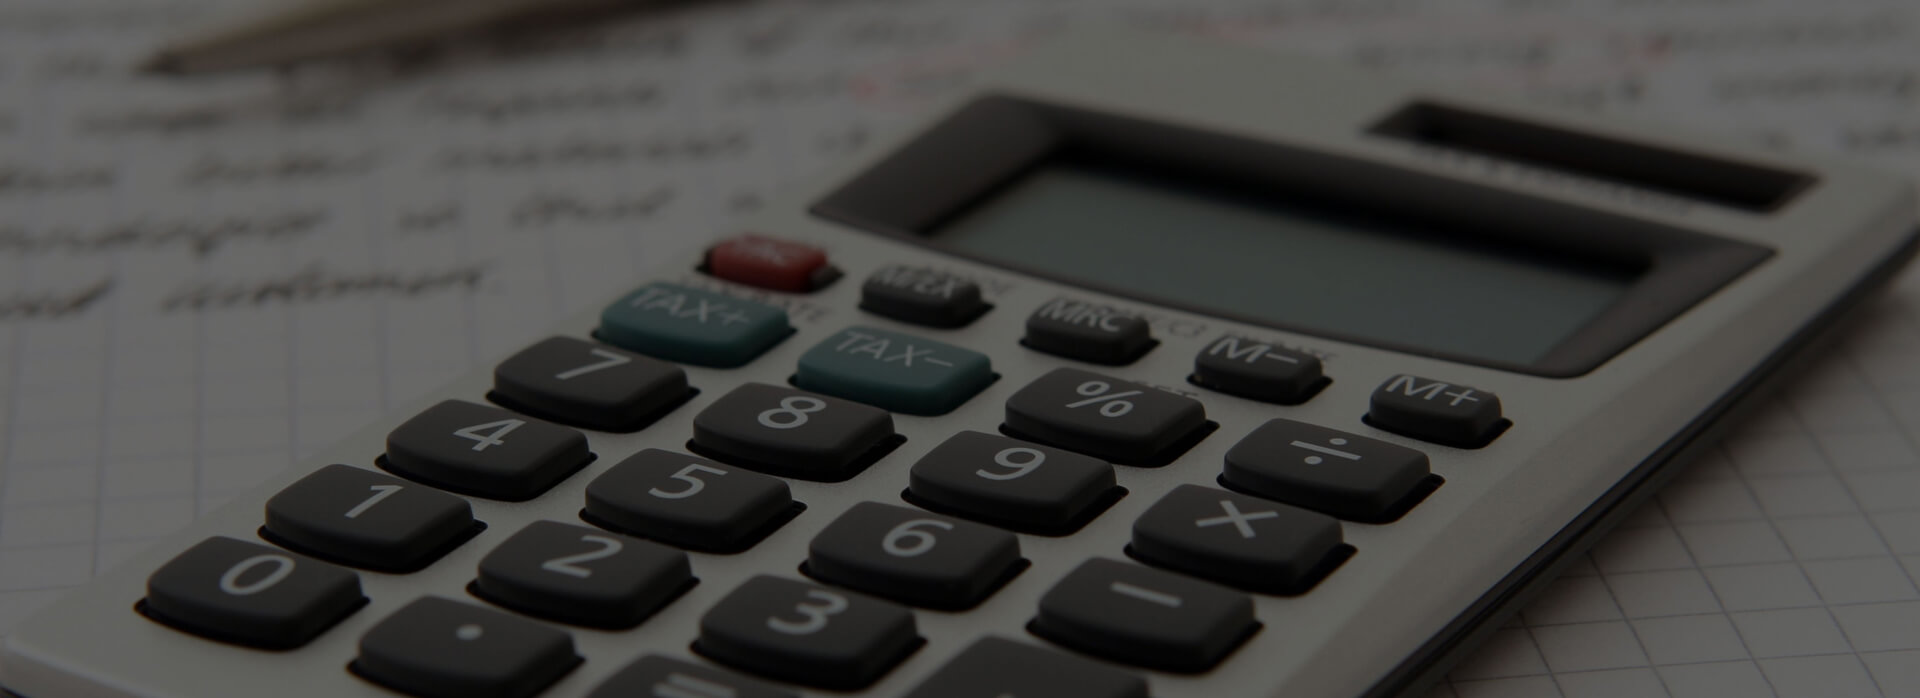 Tax Refund Calculator 22 23